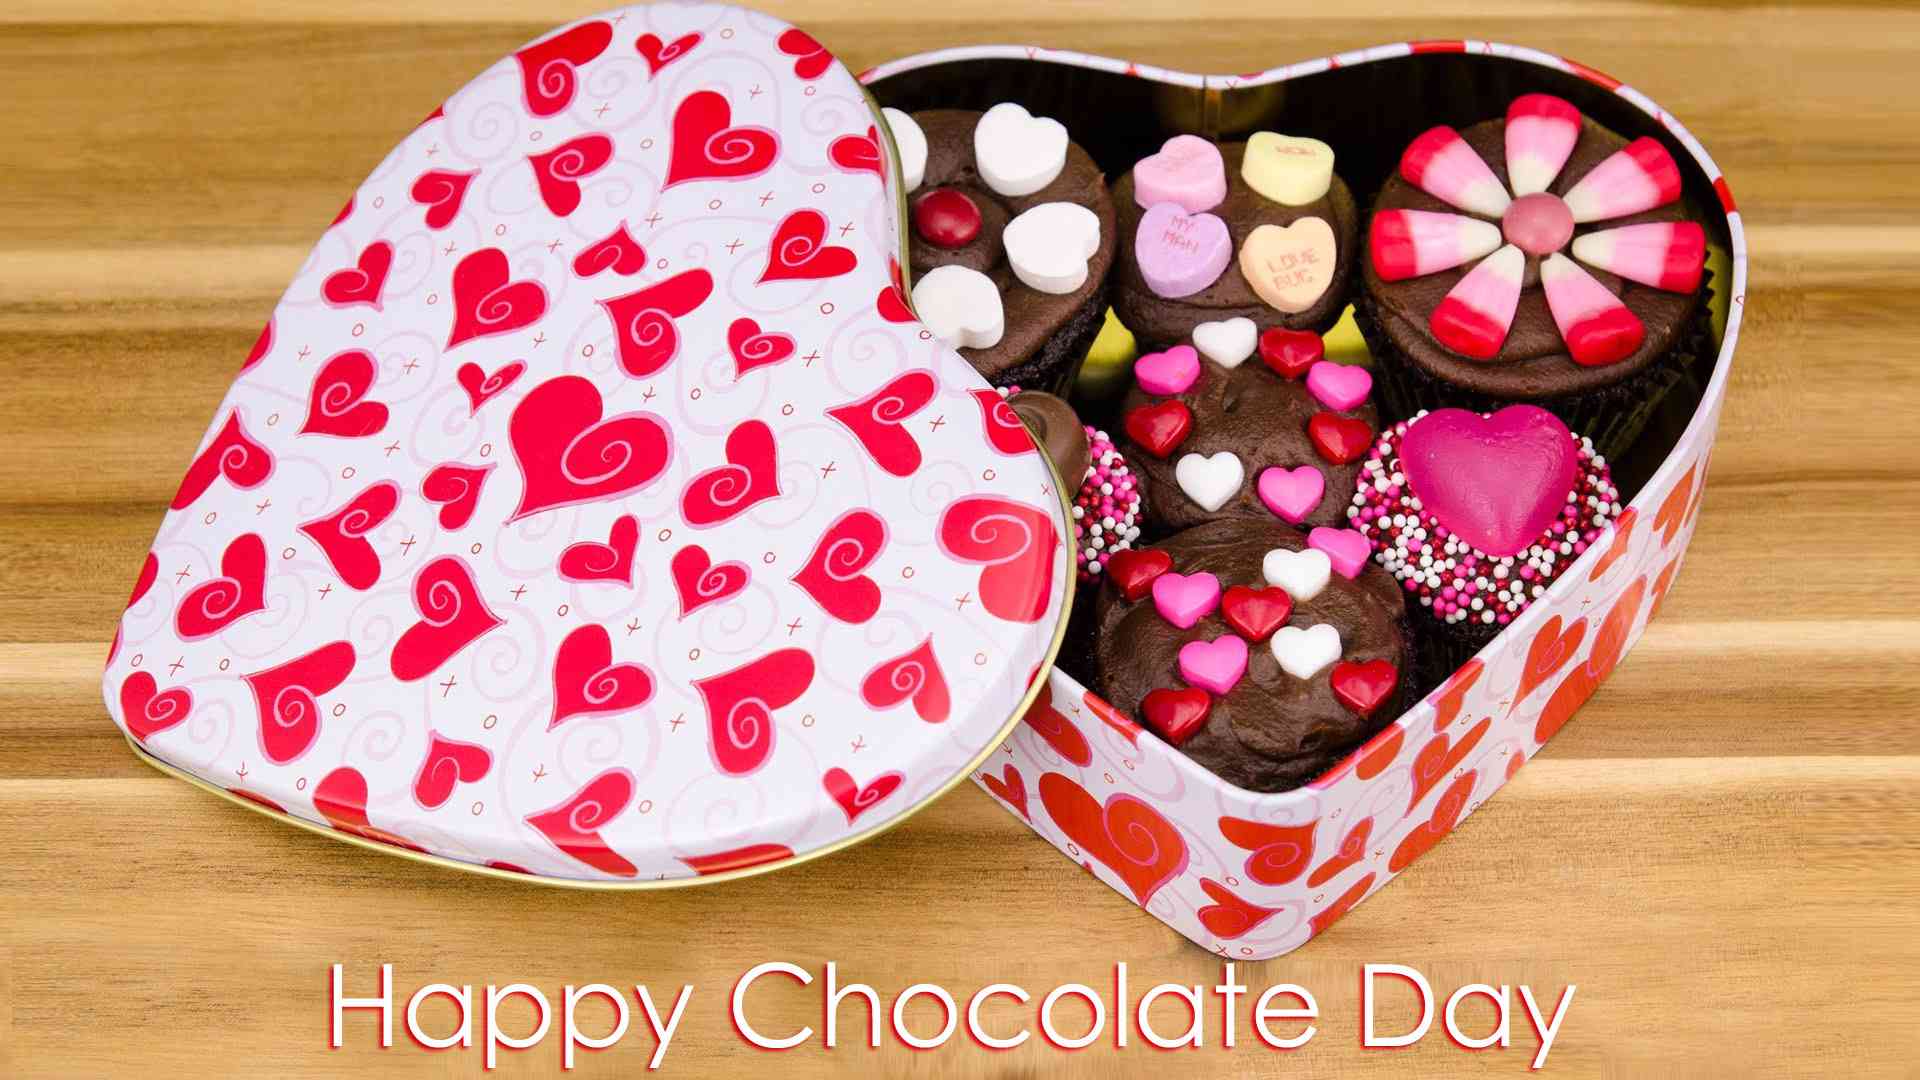 Happy Chocolate day Image, Photo, Pics & Wallpaper